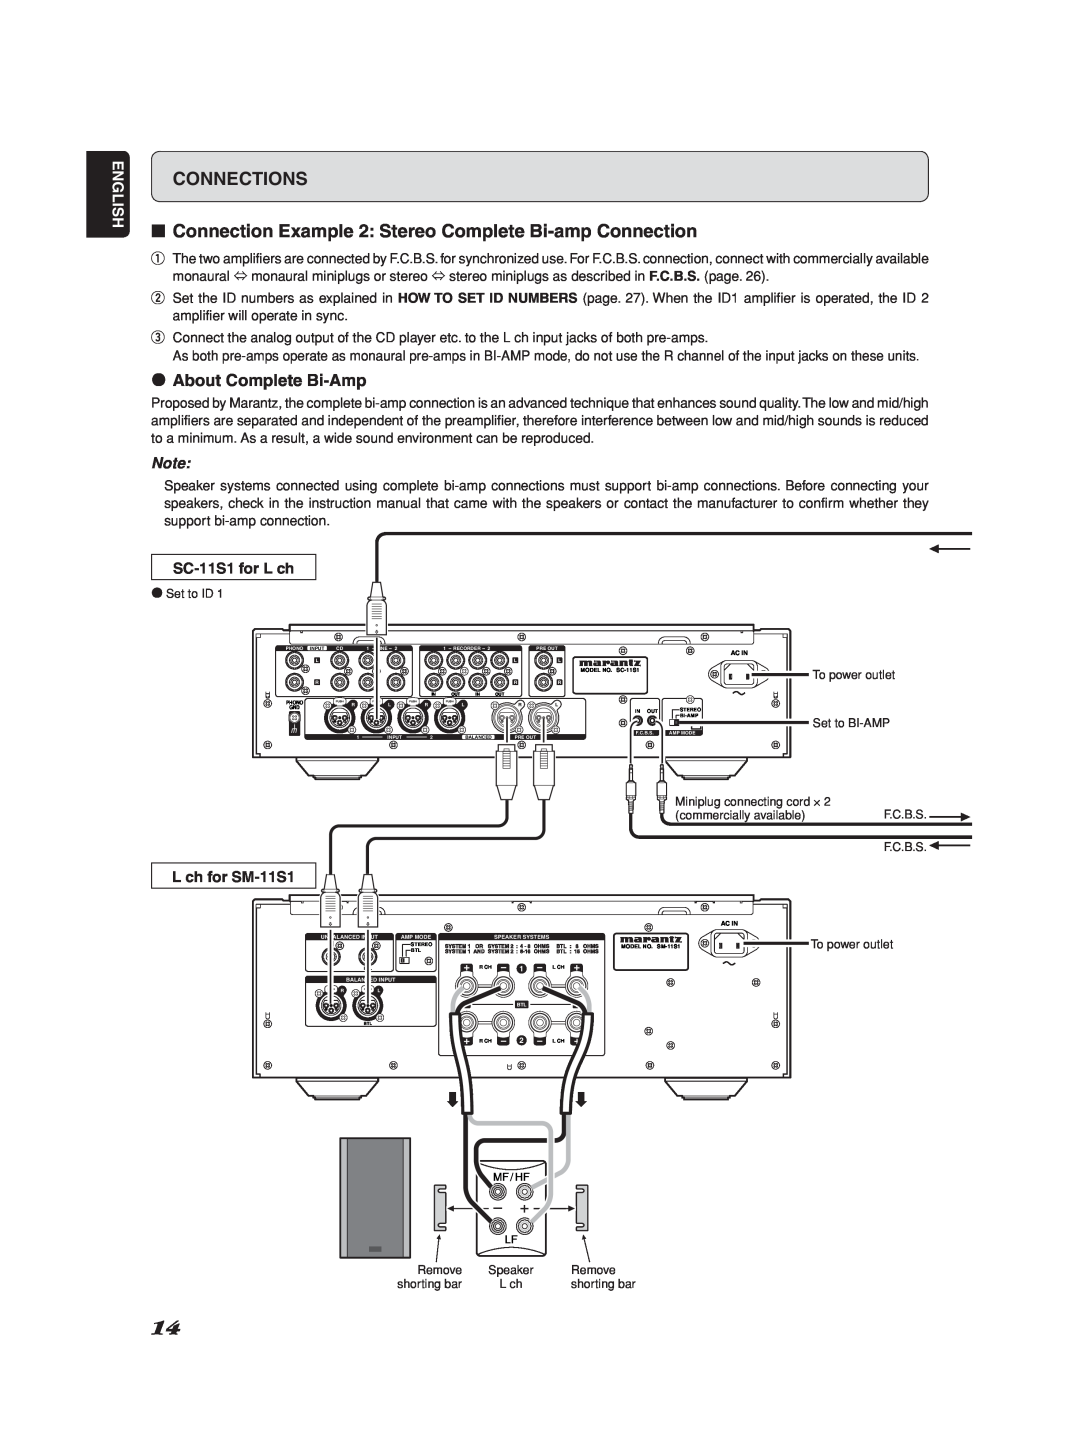 Marantz Model SC-11S1 manual Connections, ¶About Complete Bi-Amp, English 